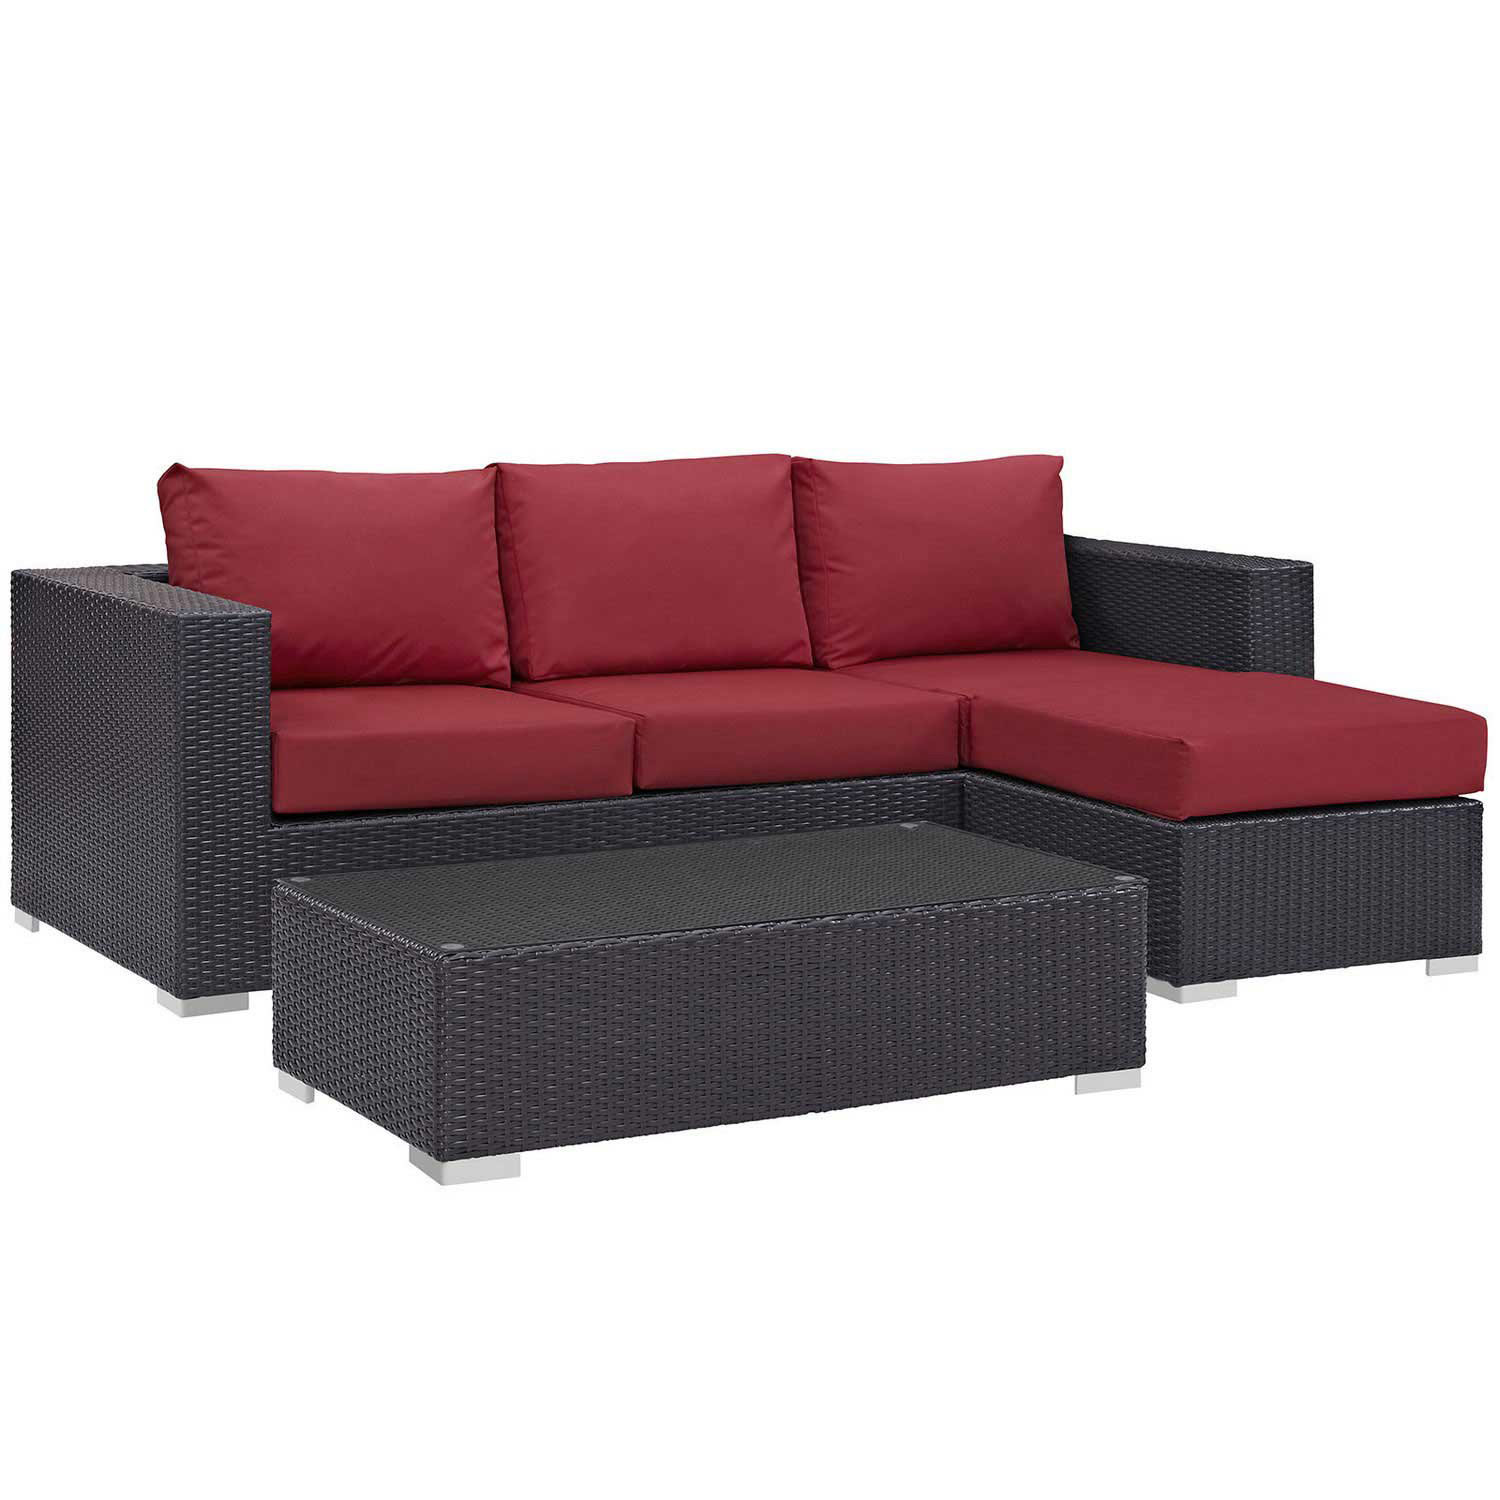 Modway Convene 3 Piece Outdoor Patio Sofa Set - Espresso Red